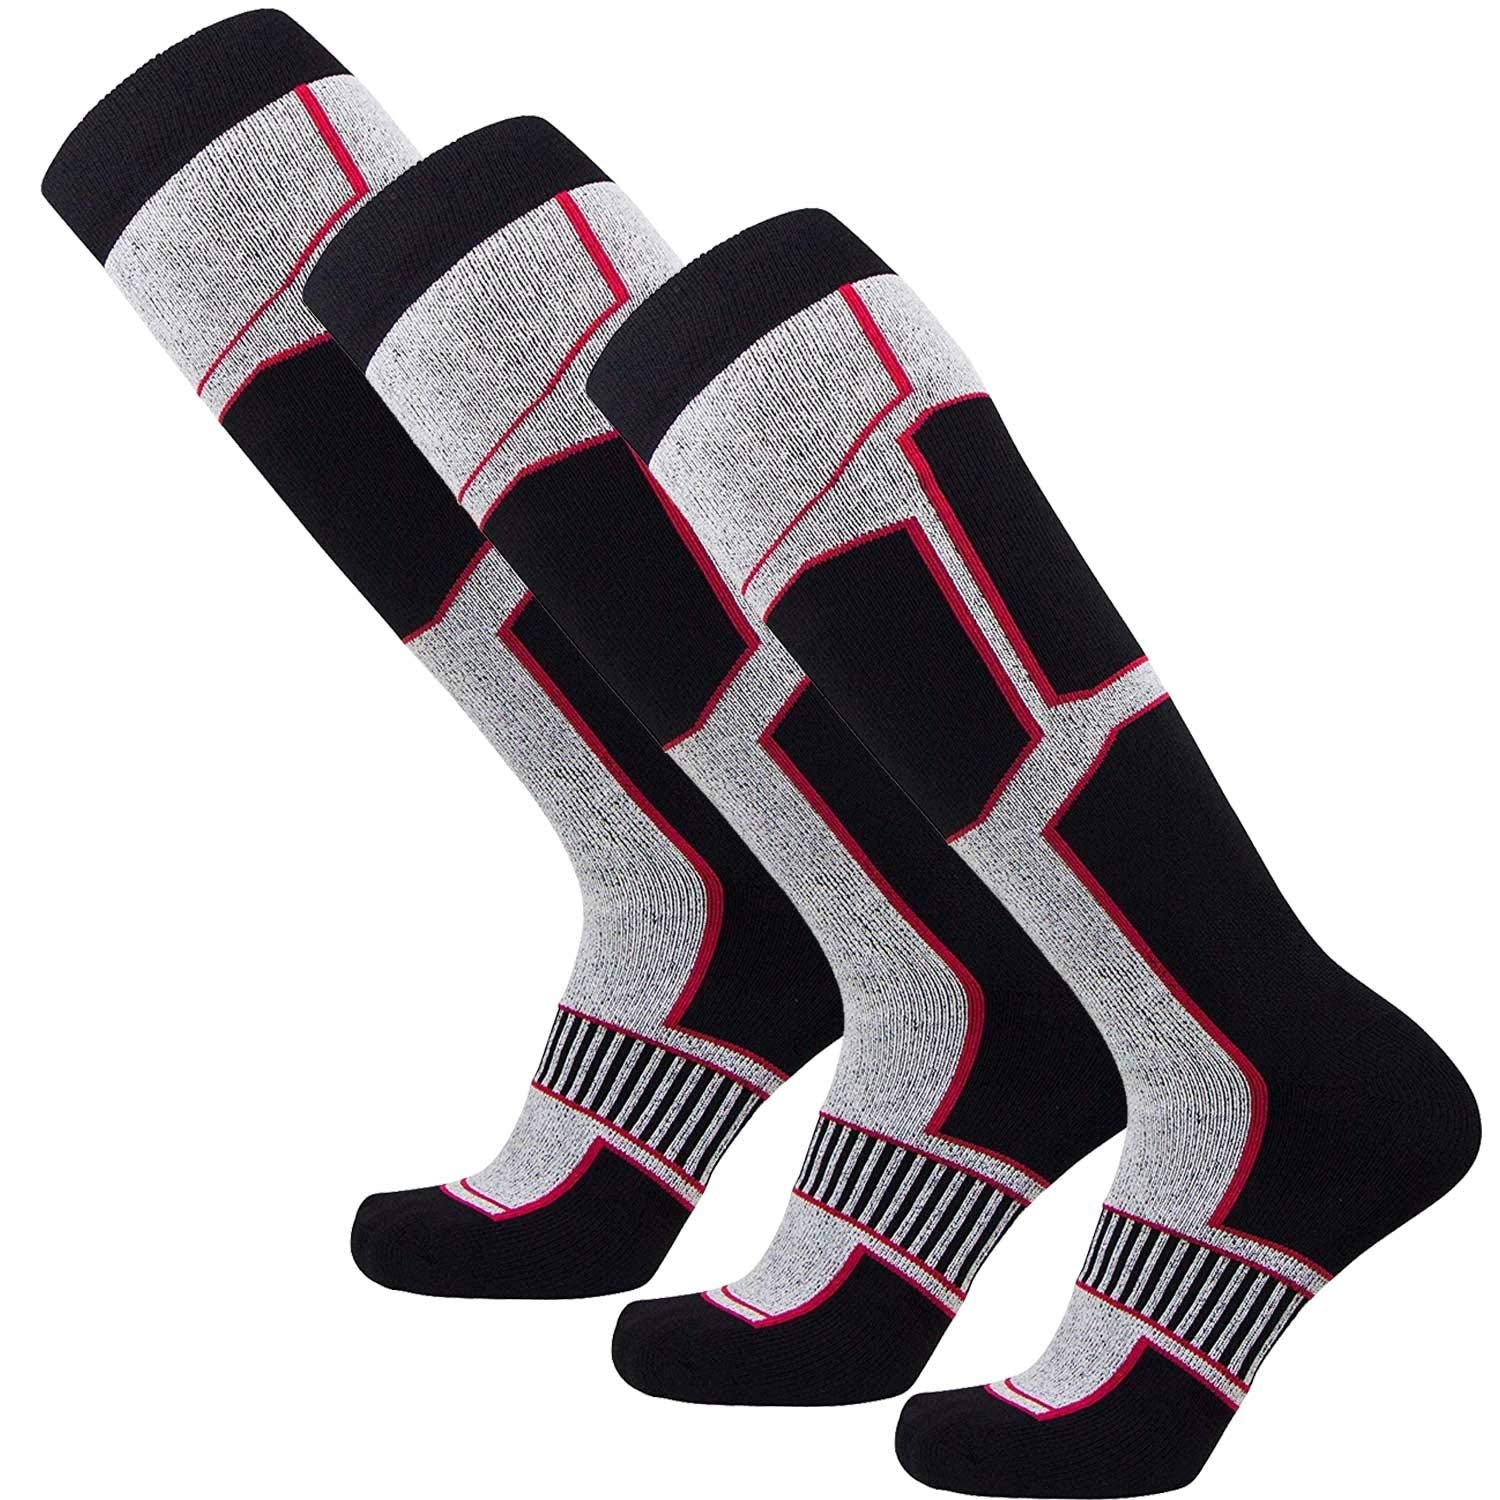 Snowboard Socks